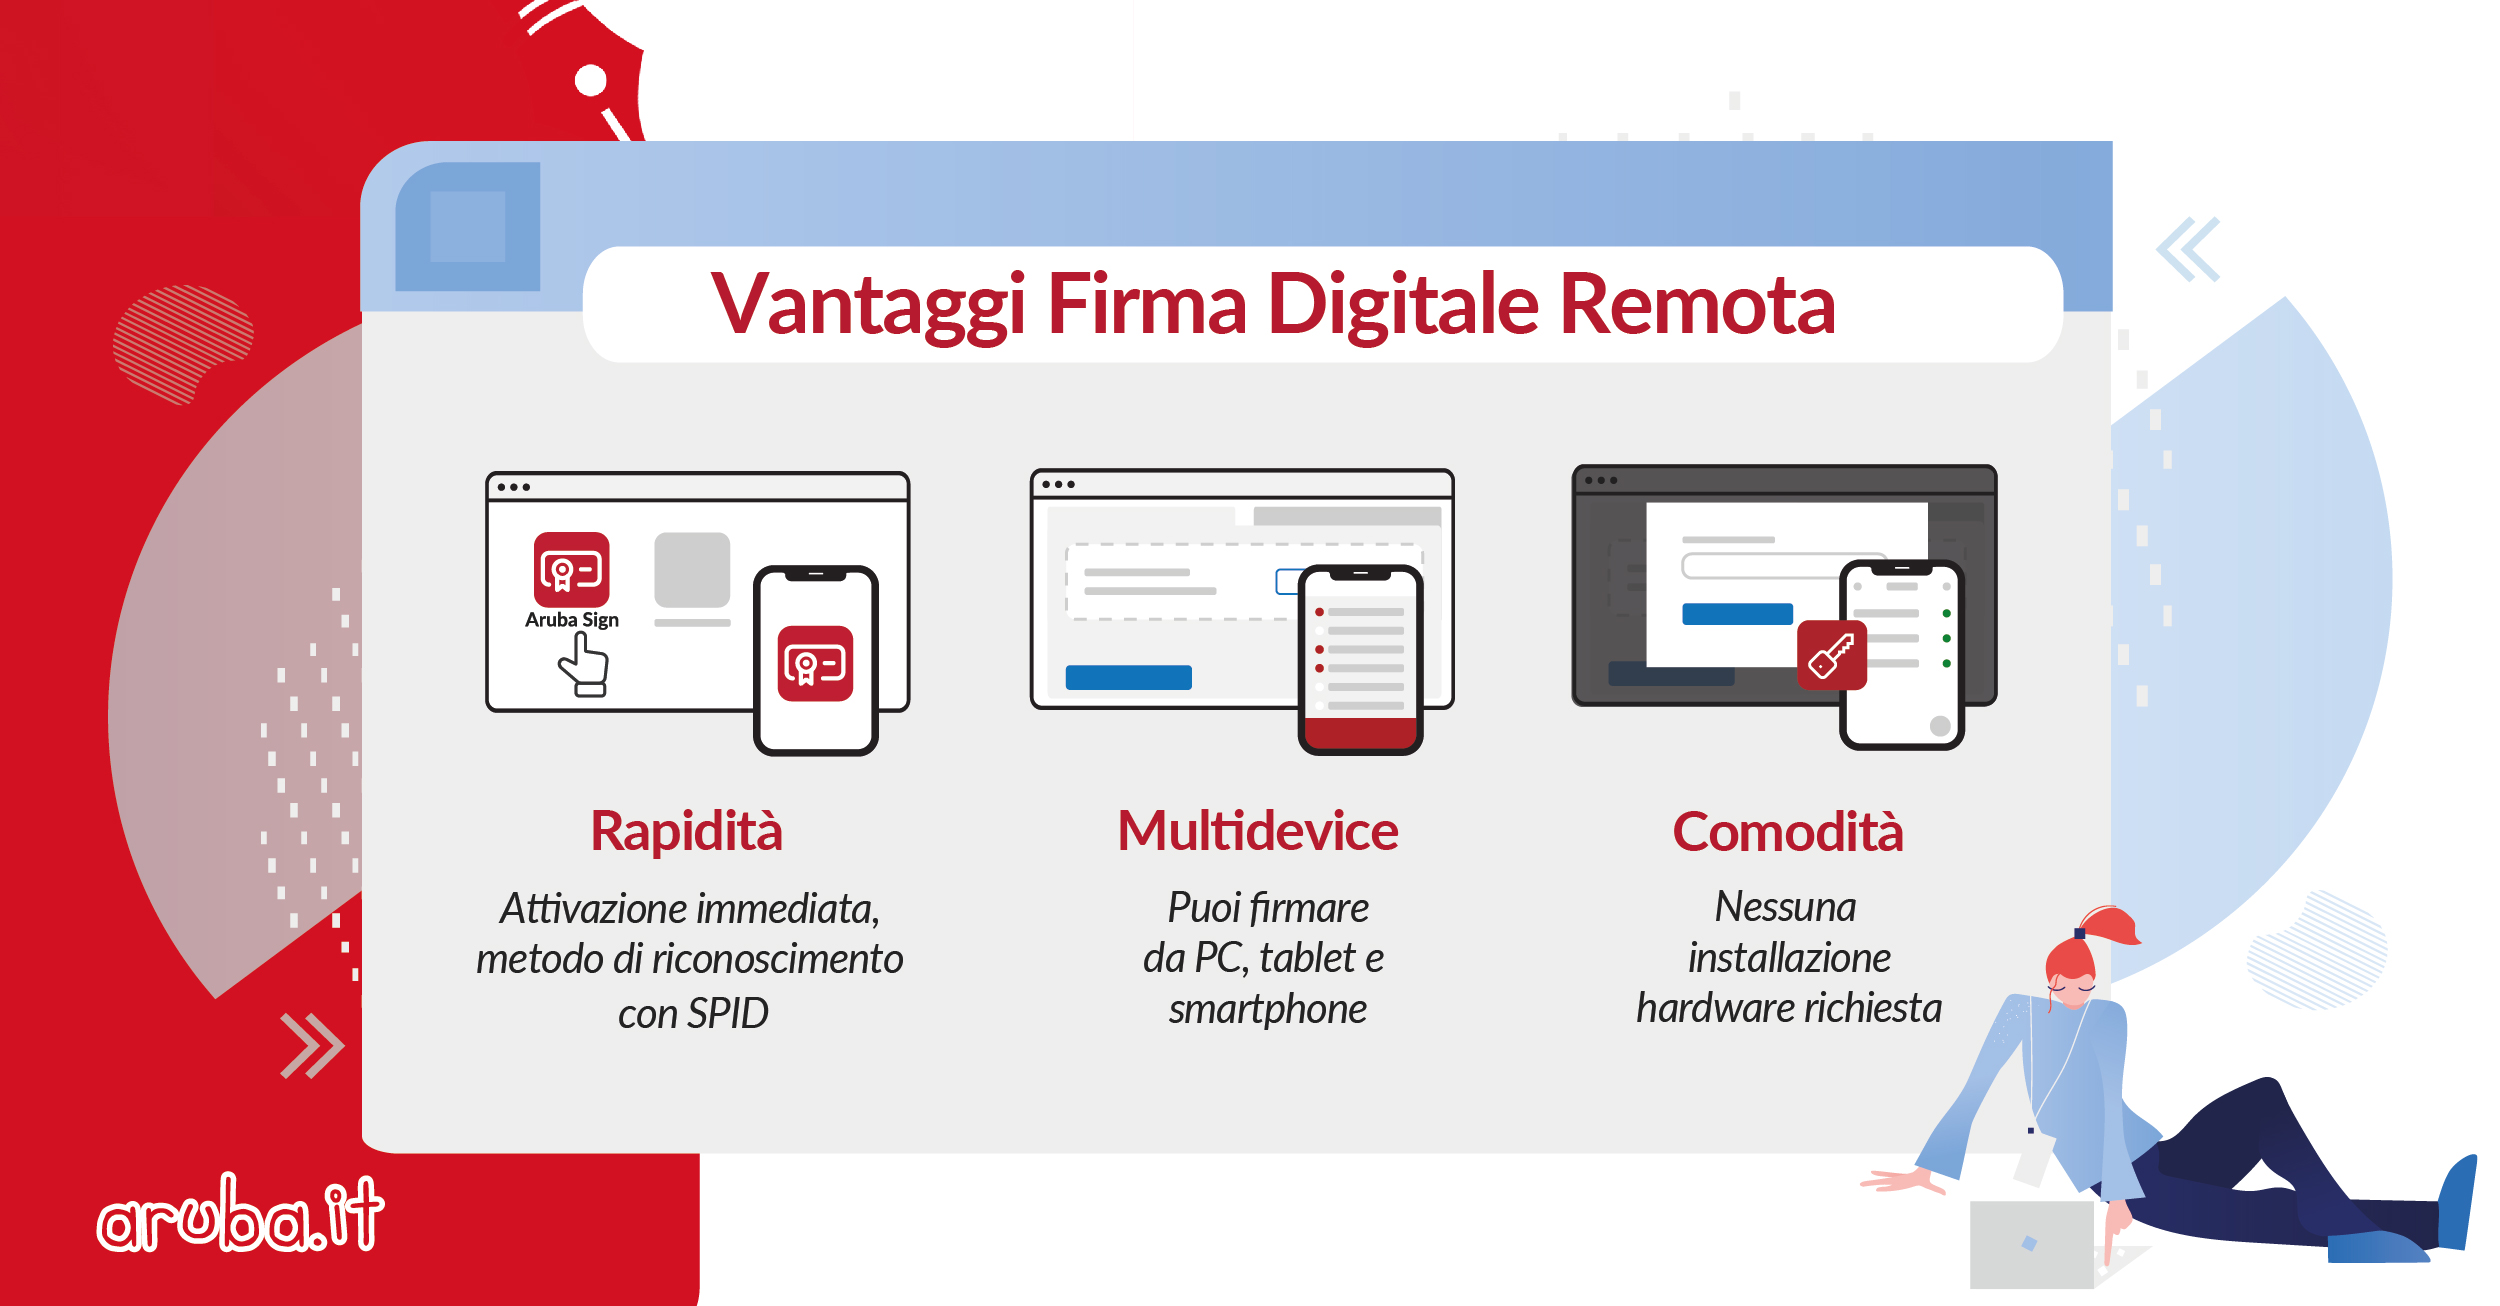 vantaggi-firma-digitale-remota_V2.jpg